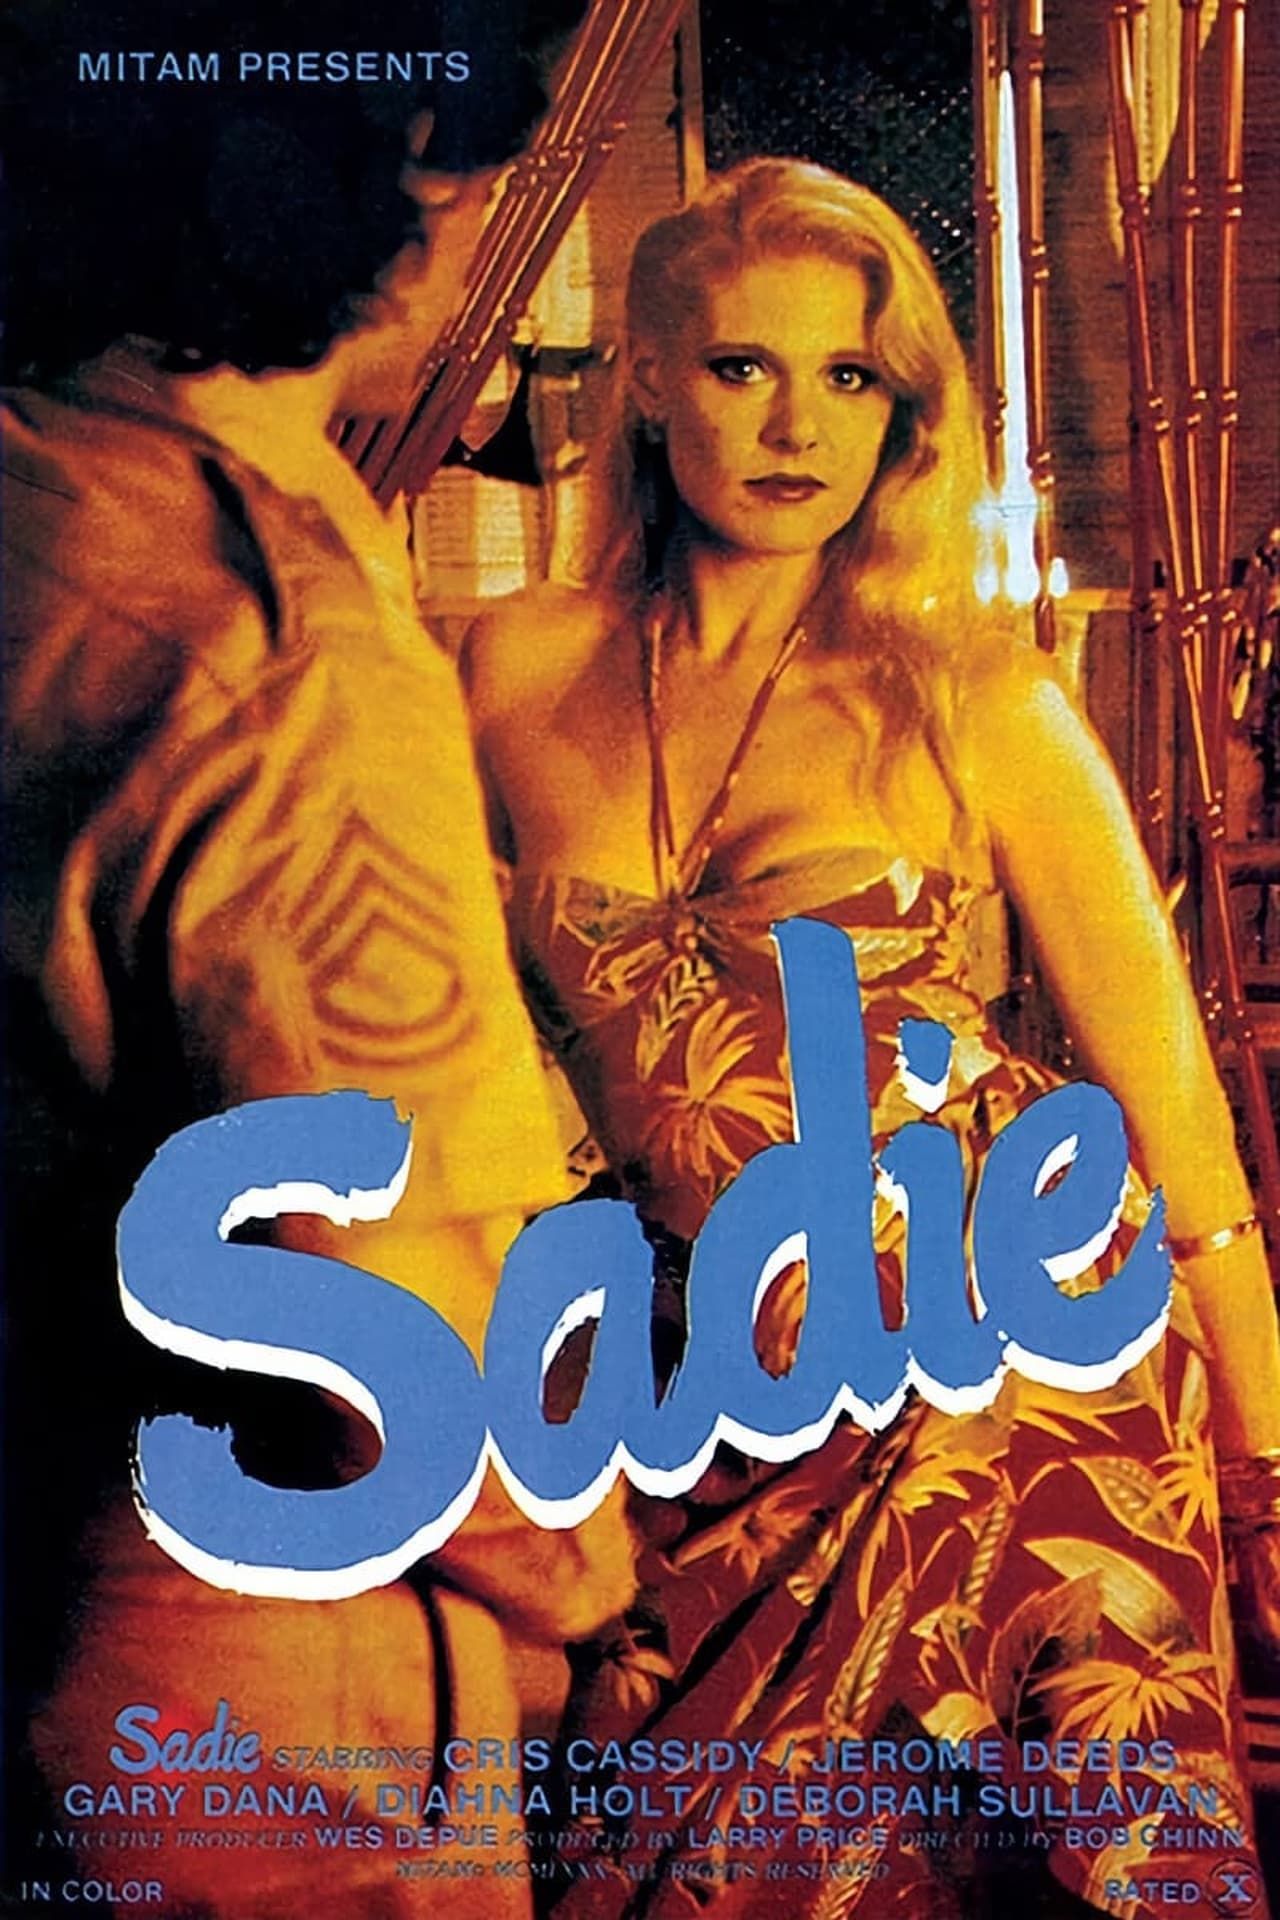 [18＋] Sadie (1980) English Movie download full movie